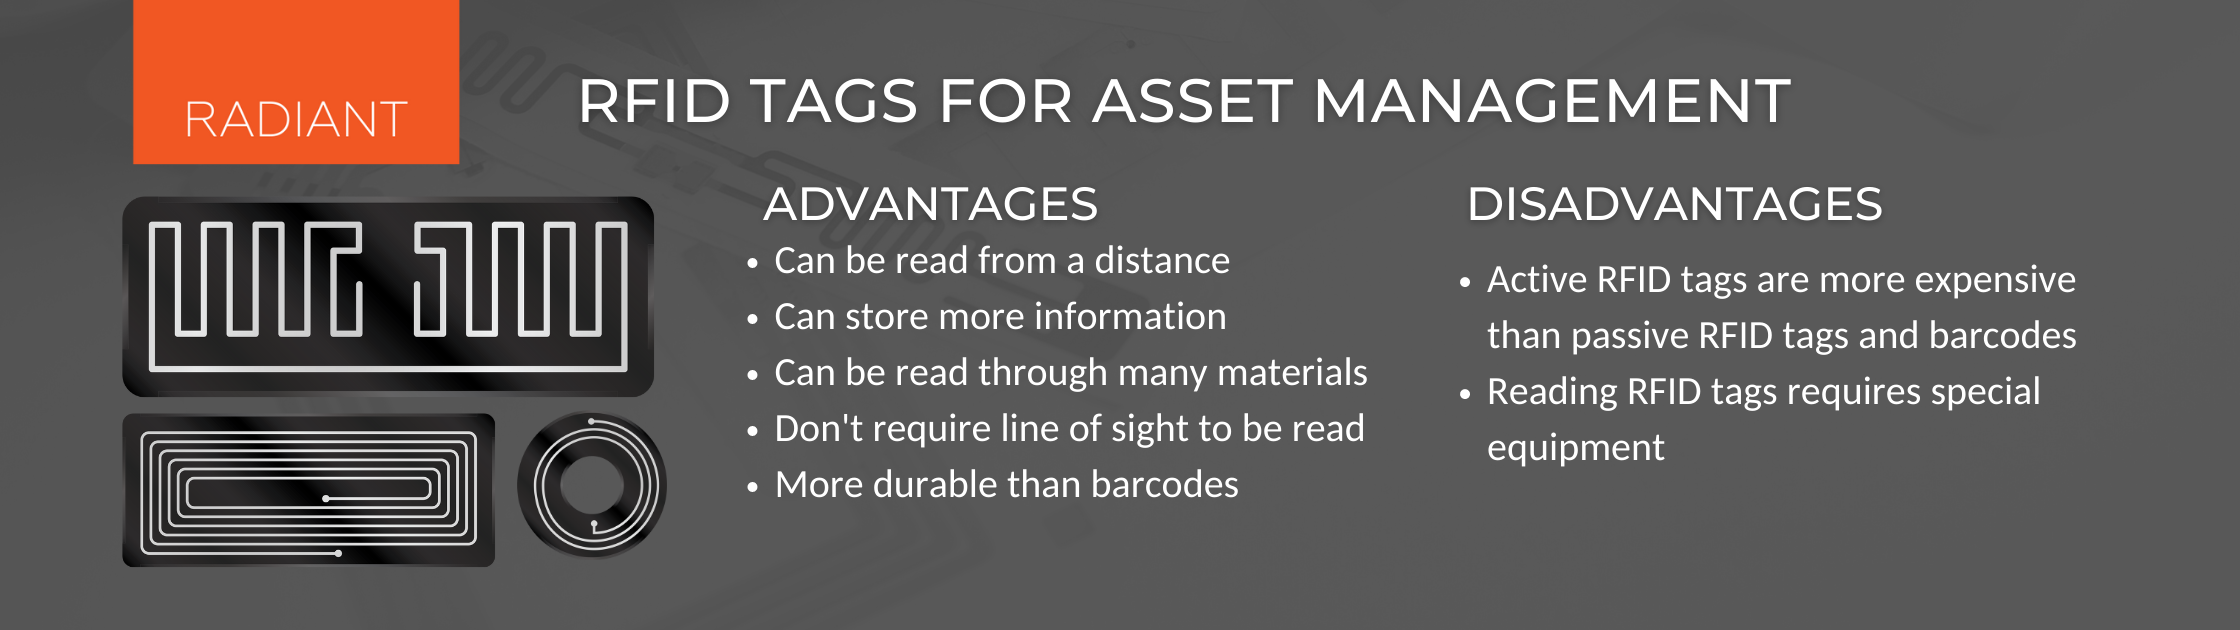 Asset Management Tags - Asset Management Tag Comparison - RFID vs Barcode Technology - RFID vs Bacode - RFID Technology - RFID Tags - RFID Tags Advantages and Disadvantages